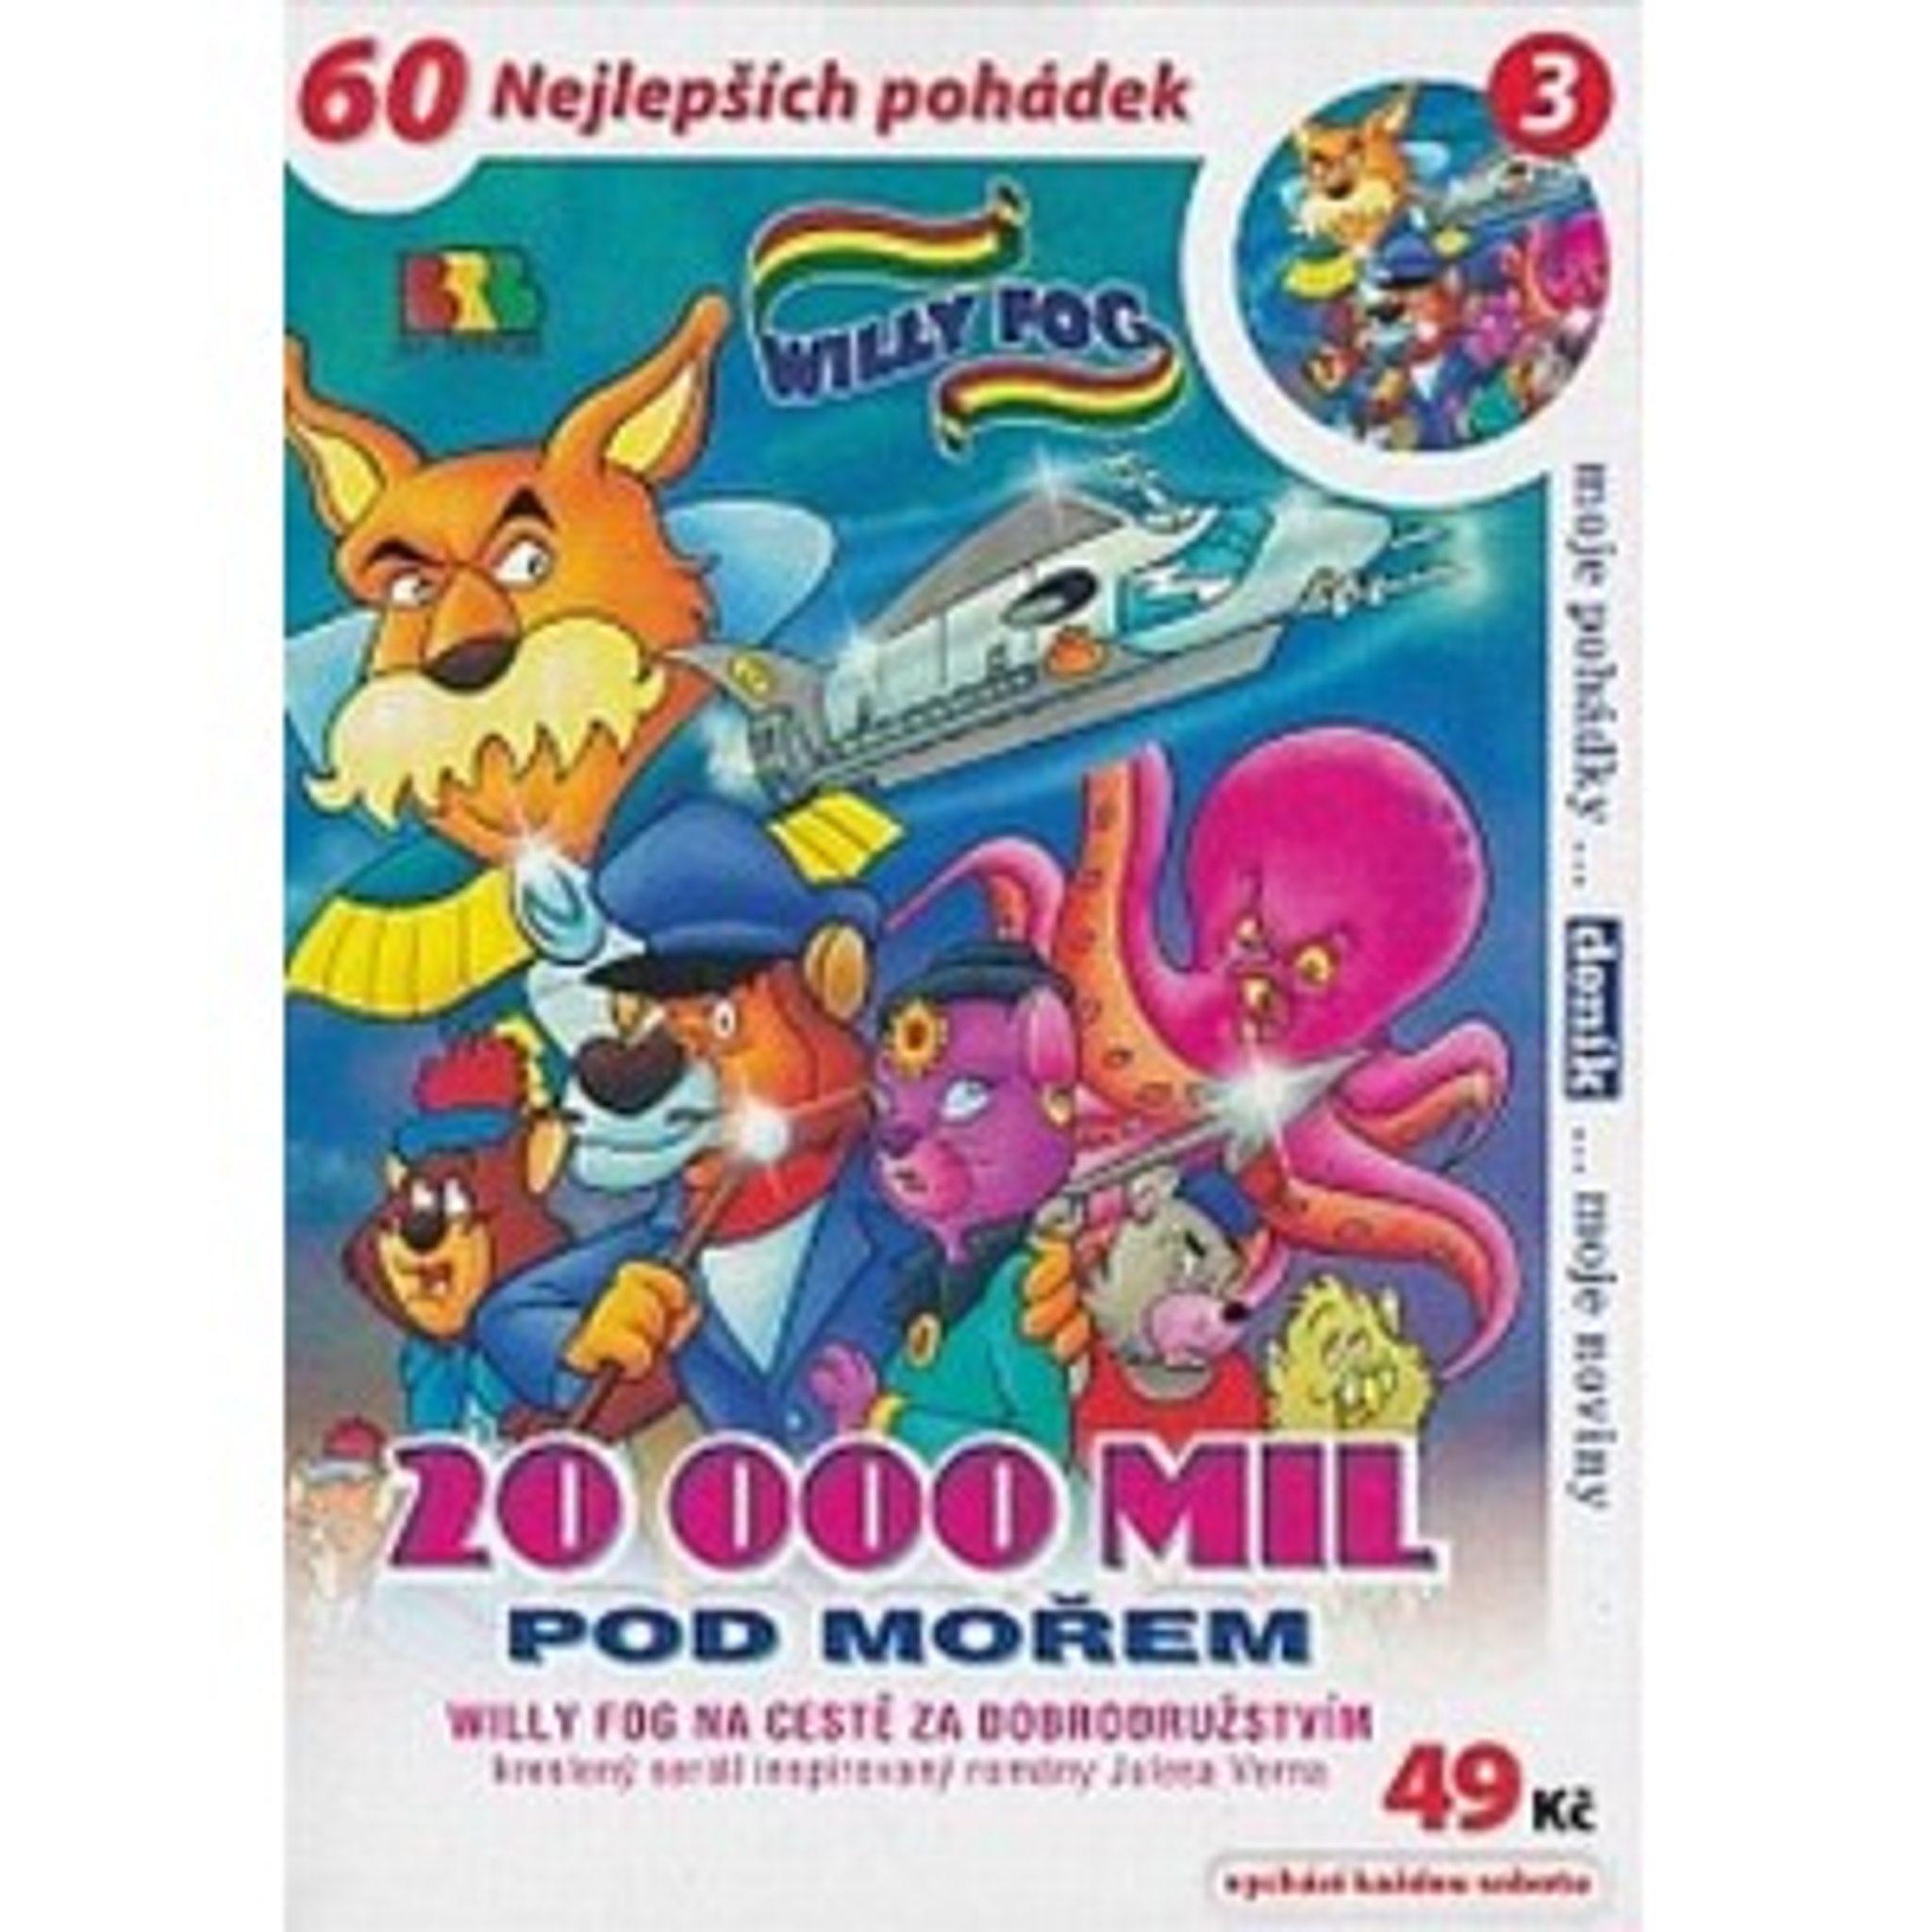 DVD Willy Fog - 20000 mil pod moem 3